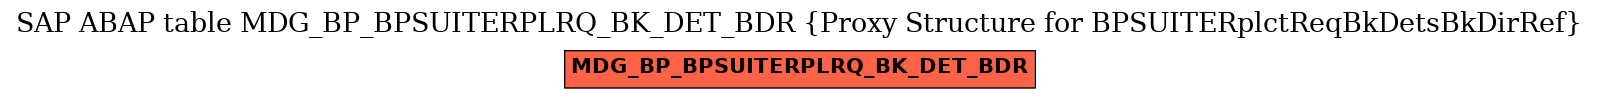 E-R Diagram for table MDG_BP_BPSUITERPLRQ_BK_DET_BDR (Proxy Structure for BPSUITERplctReqBkDetsBkDirRef)